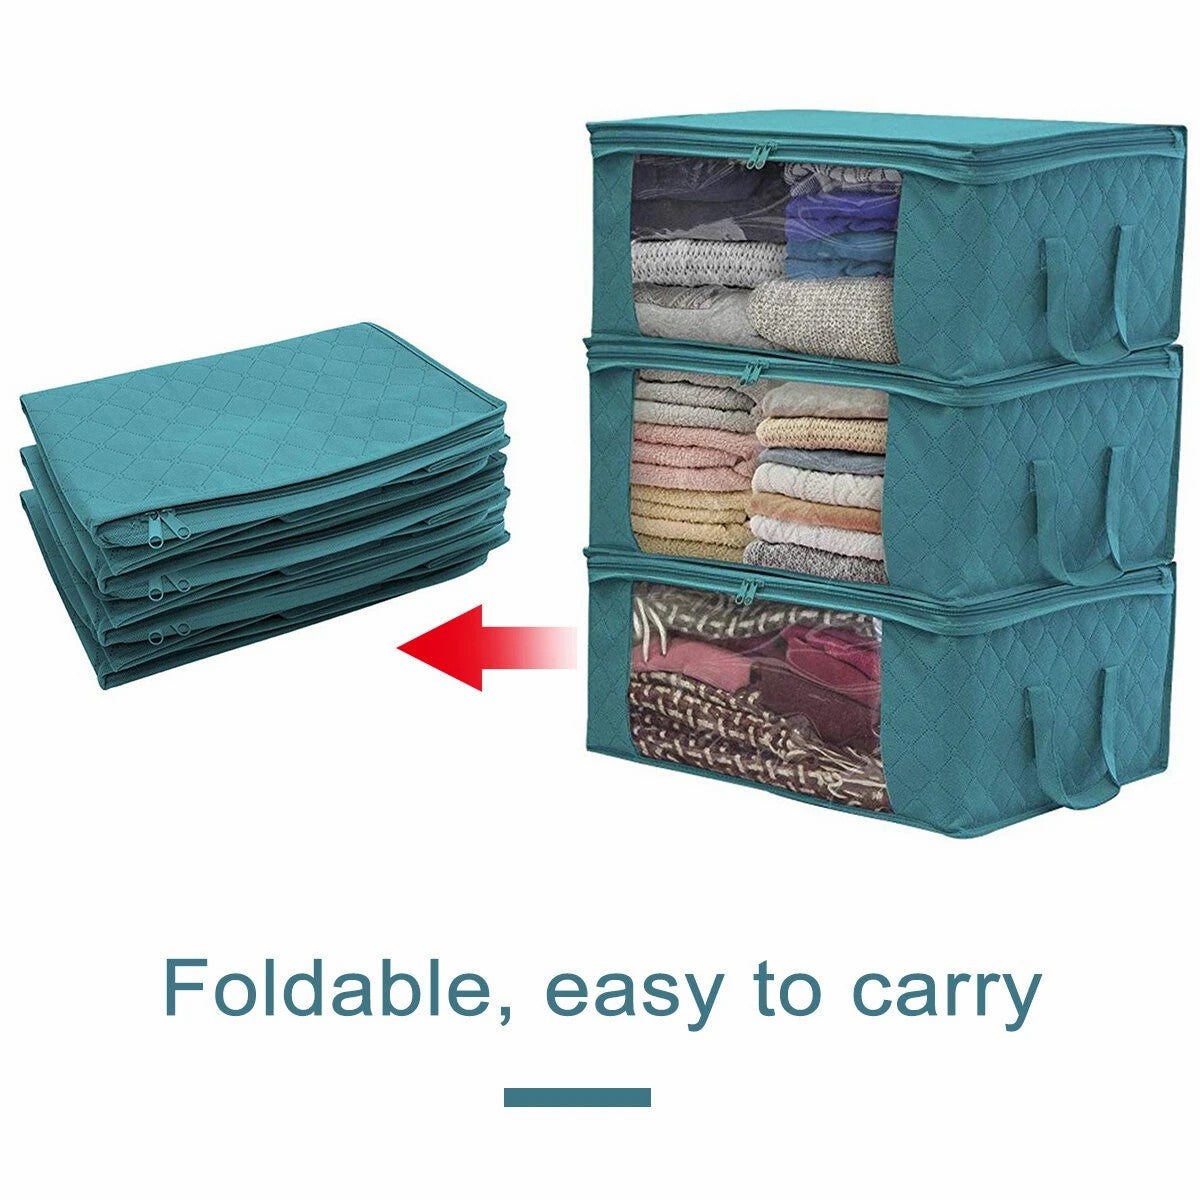 

3PCS Foldable Clothes Storage Boxes Bags Ziped Organizers Closet Wardrobe, Bule